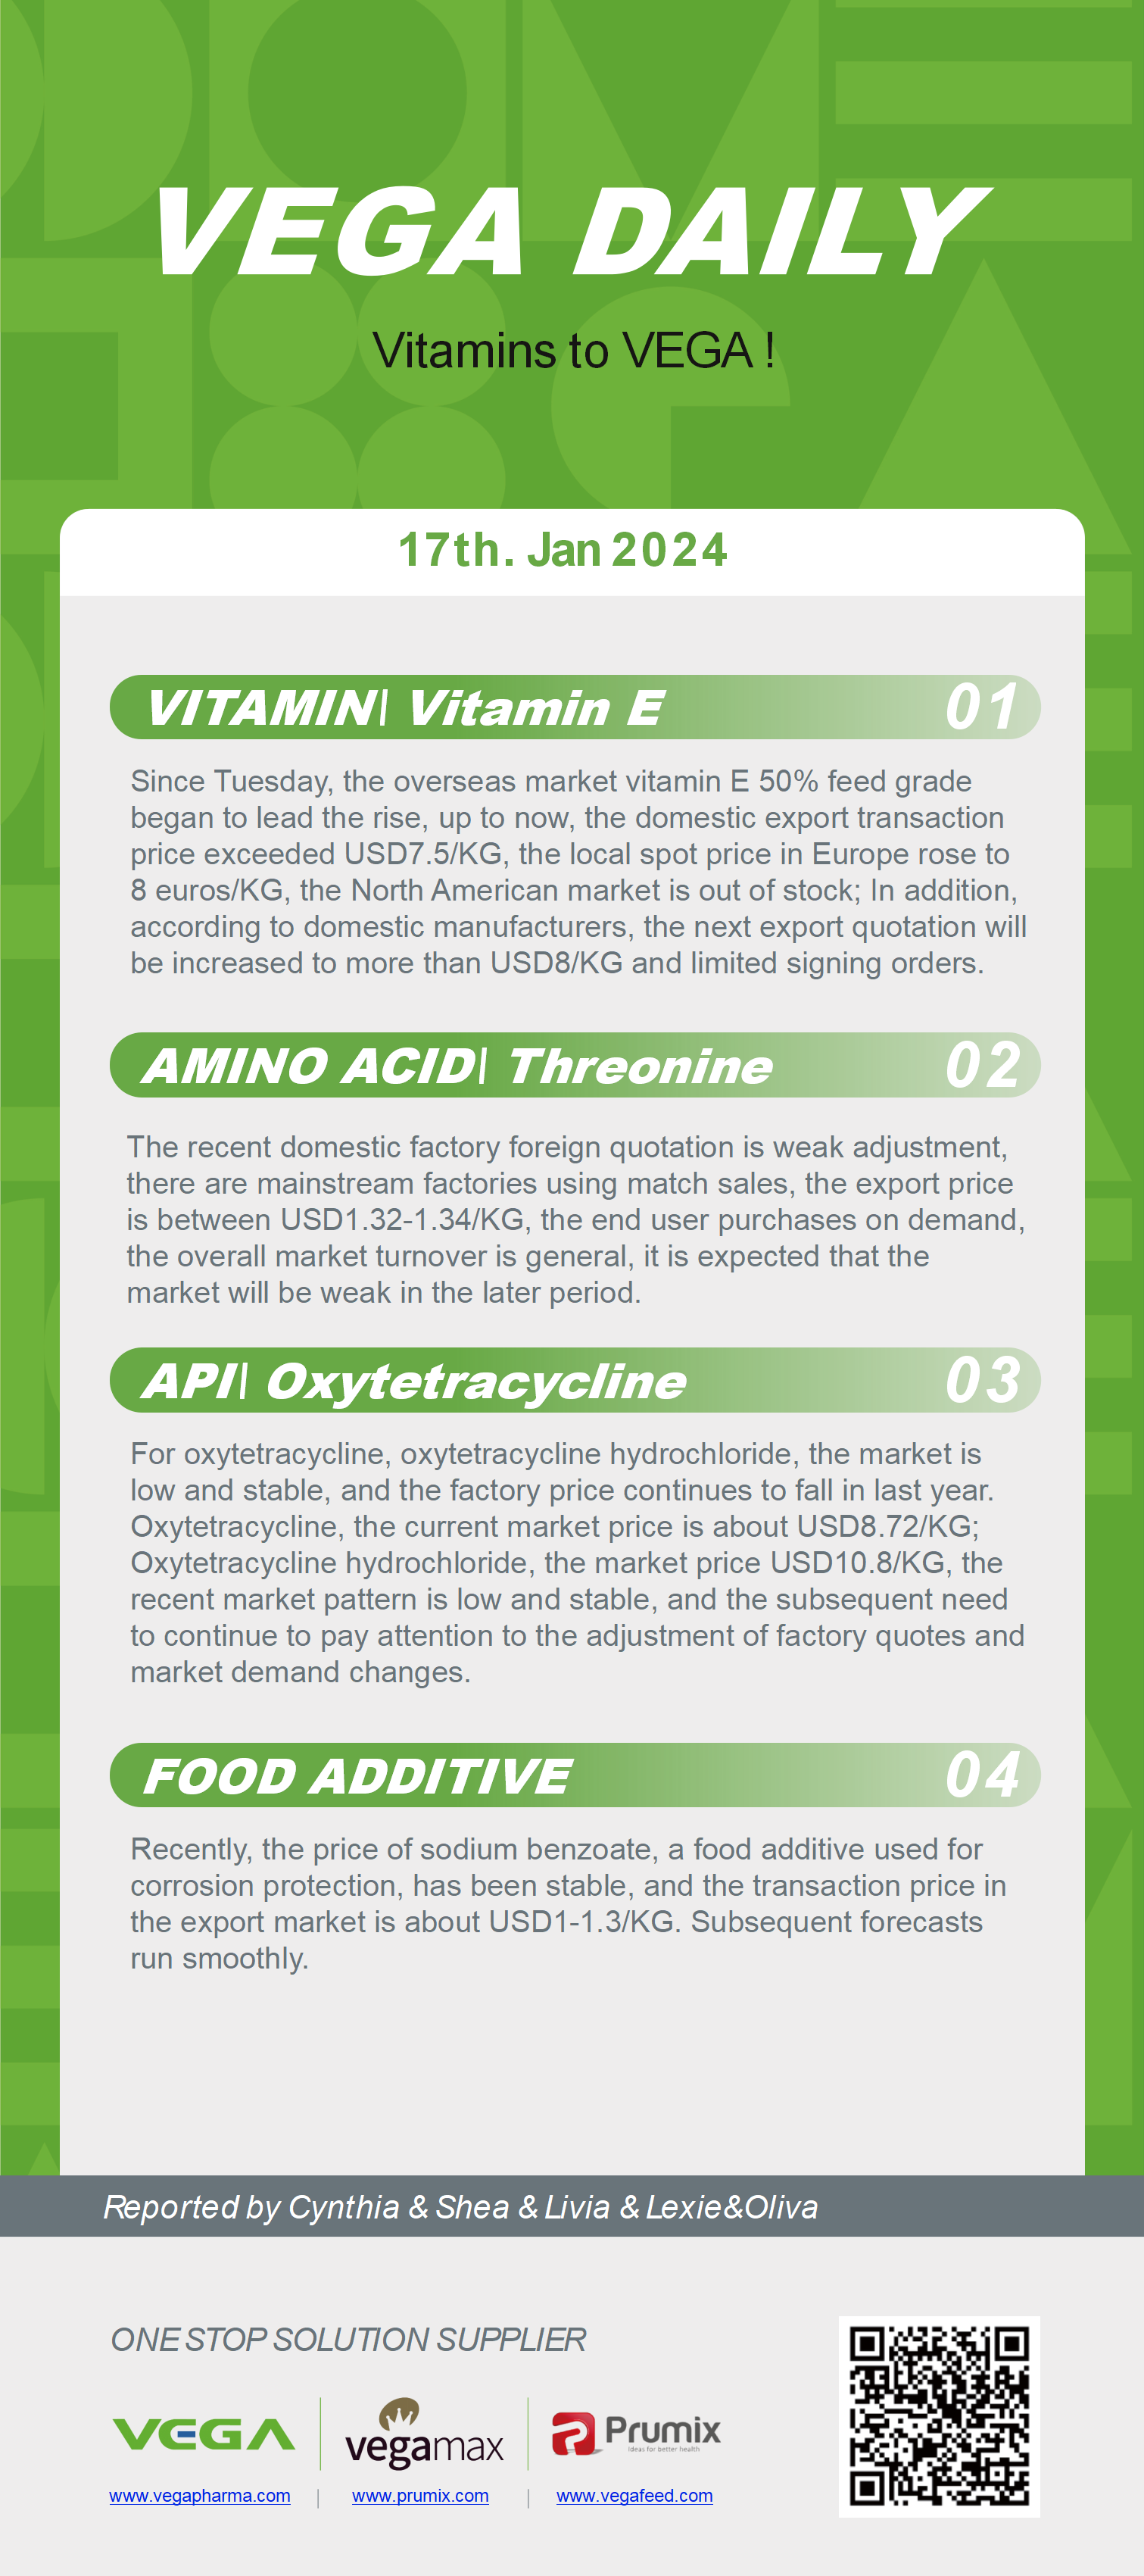 Vega Daily Dated on Jan 17th 2024 Vitamin Amino Acid APl Food Additives.png